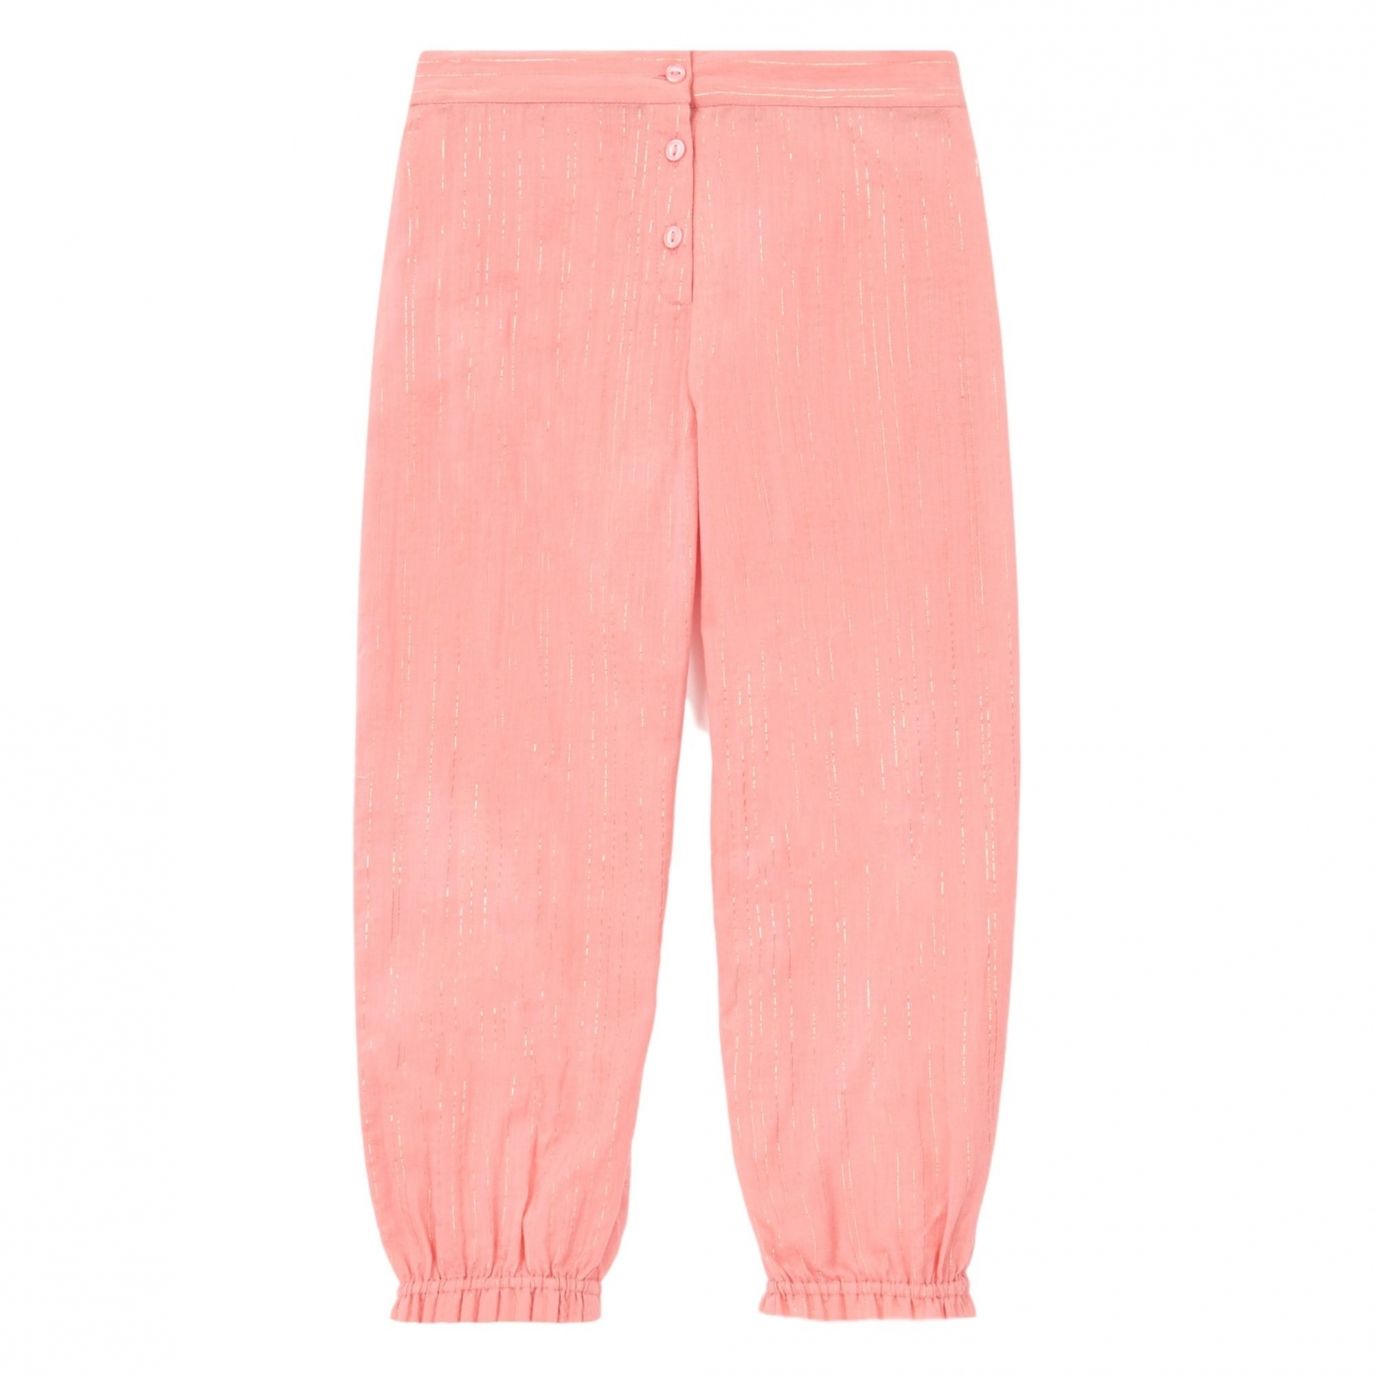 Bonton Spodnie Infini różowe E20INFINI 